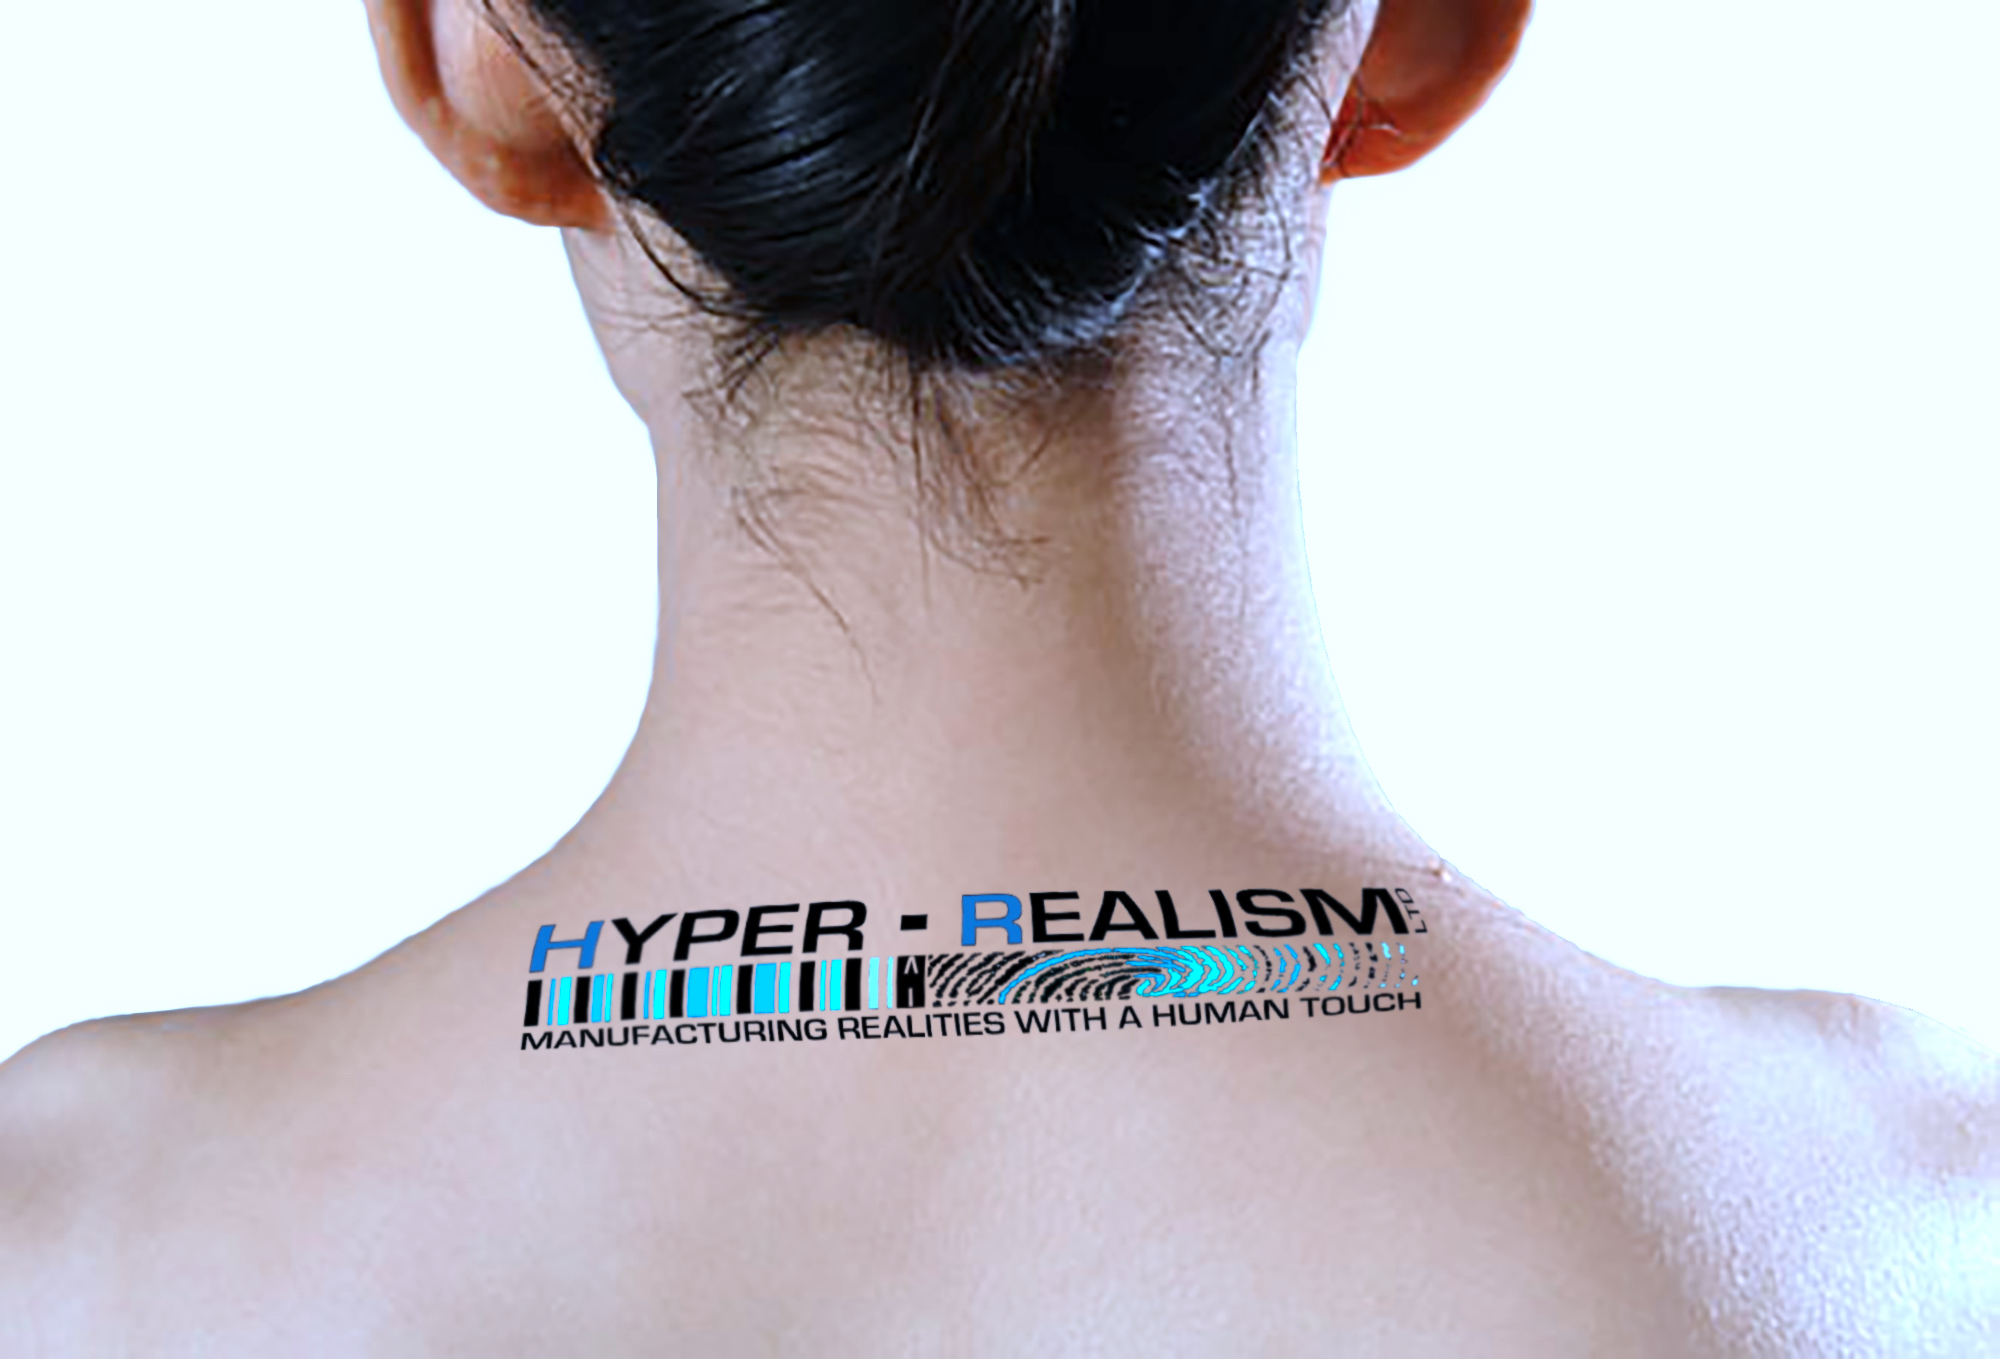 Hyper-Realism Labs Ltd